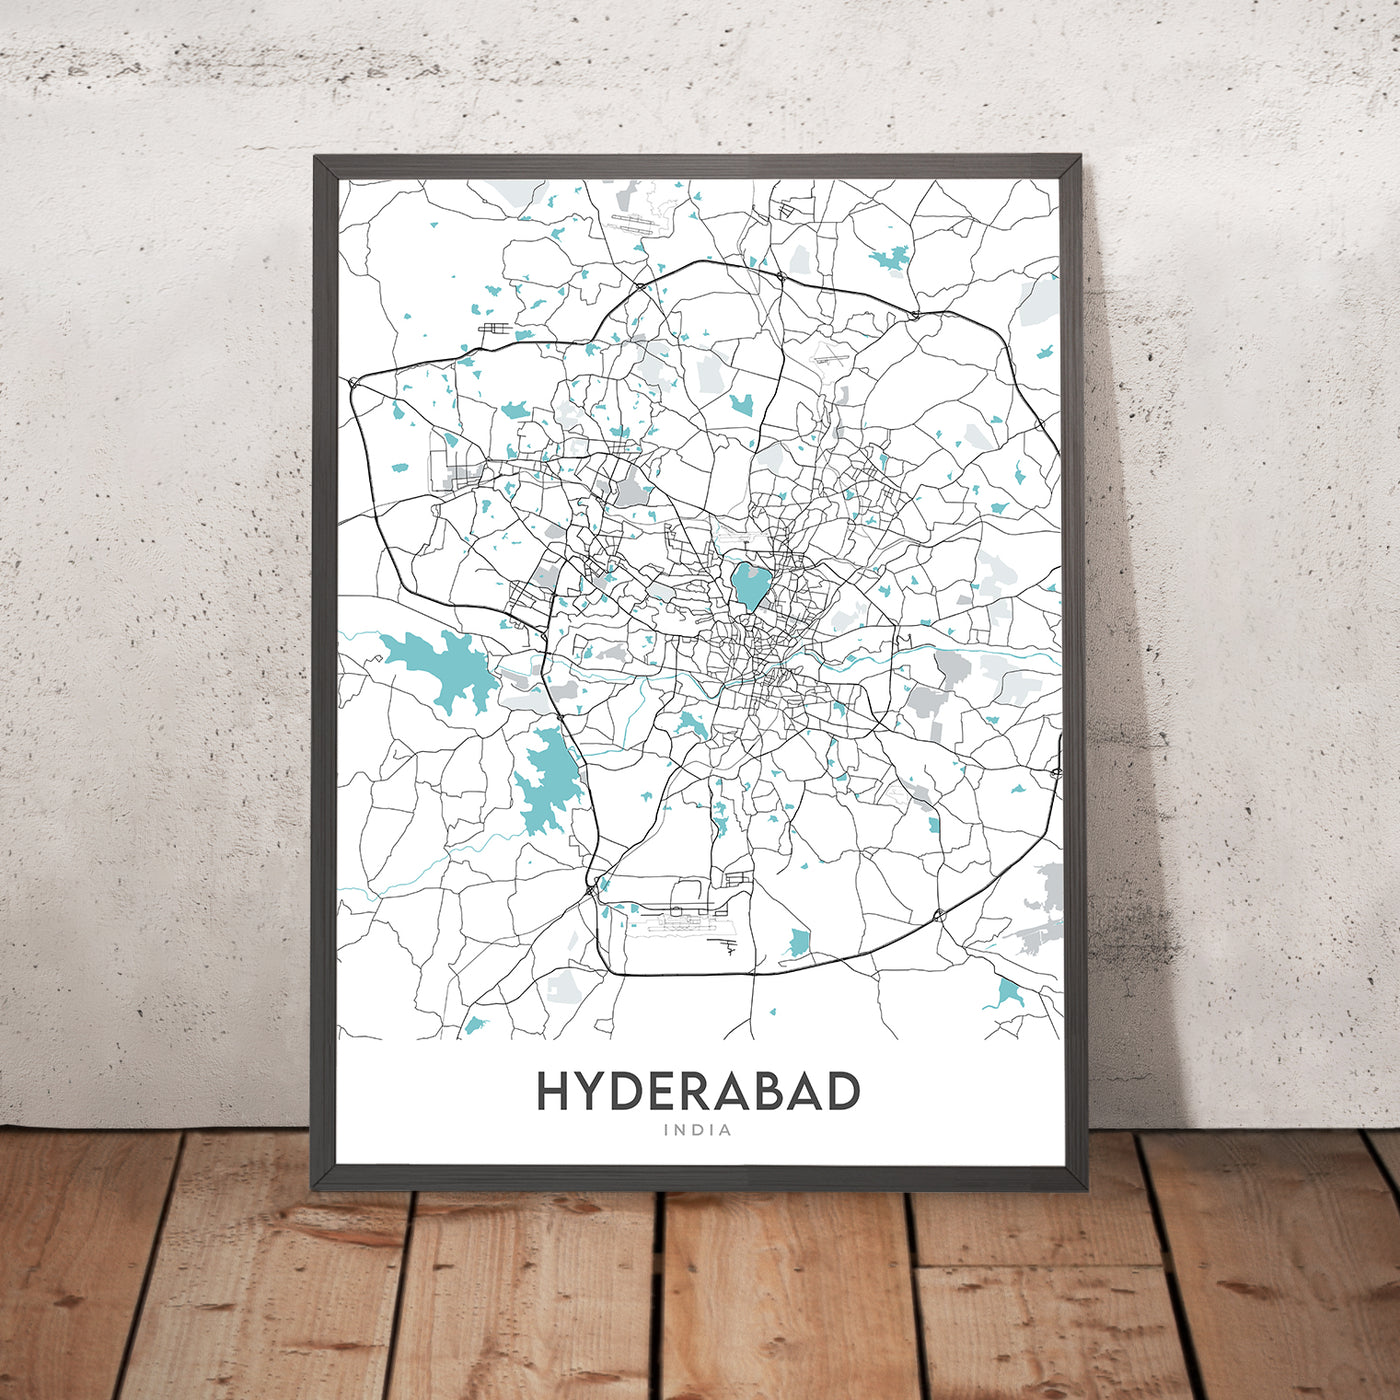 Plan de la ville moderne d'Hyderabad, Inde : Banjara Hills, HITEC City, Hussain Sagar, KBR Park, Old Mumbai Hwy